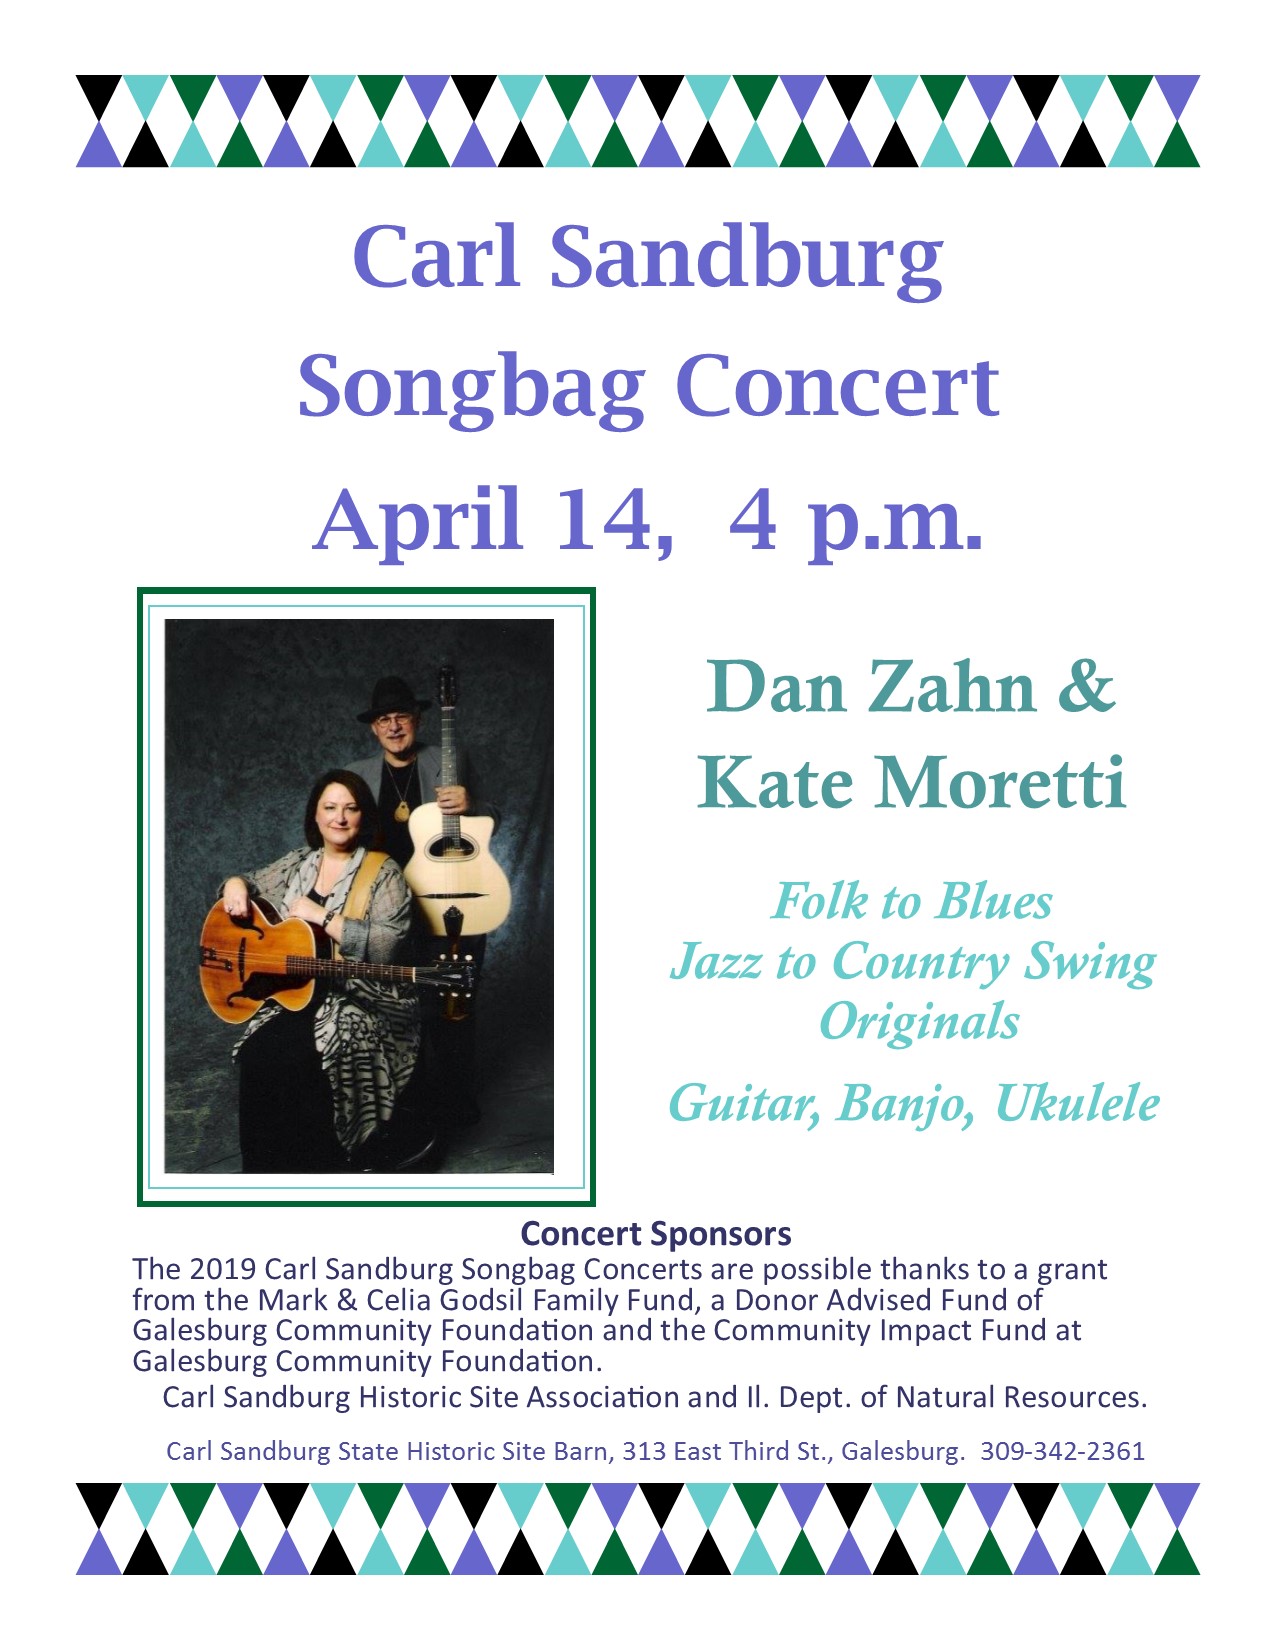 Dan Zahn & Kate Moretti - Sandburg Songbag Concert - April 14, 2019 - 4:00pm